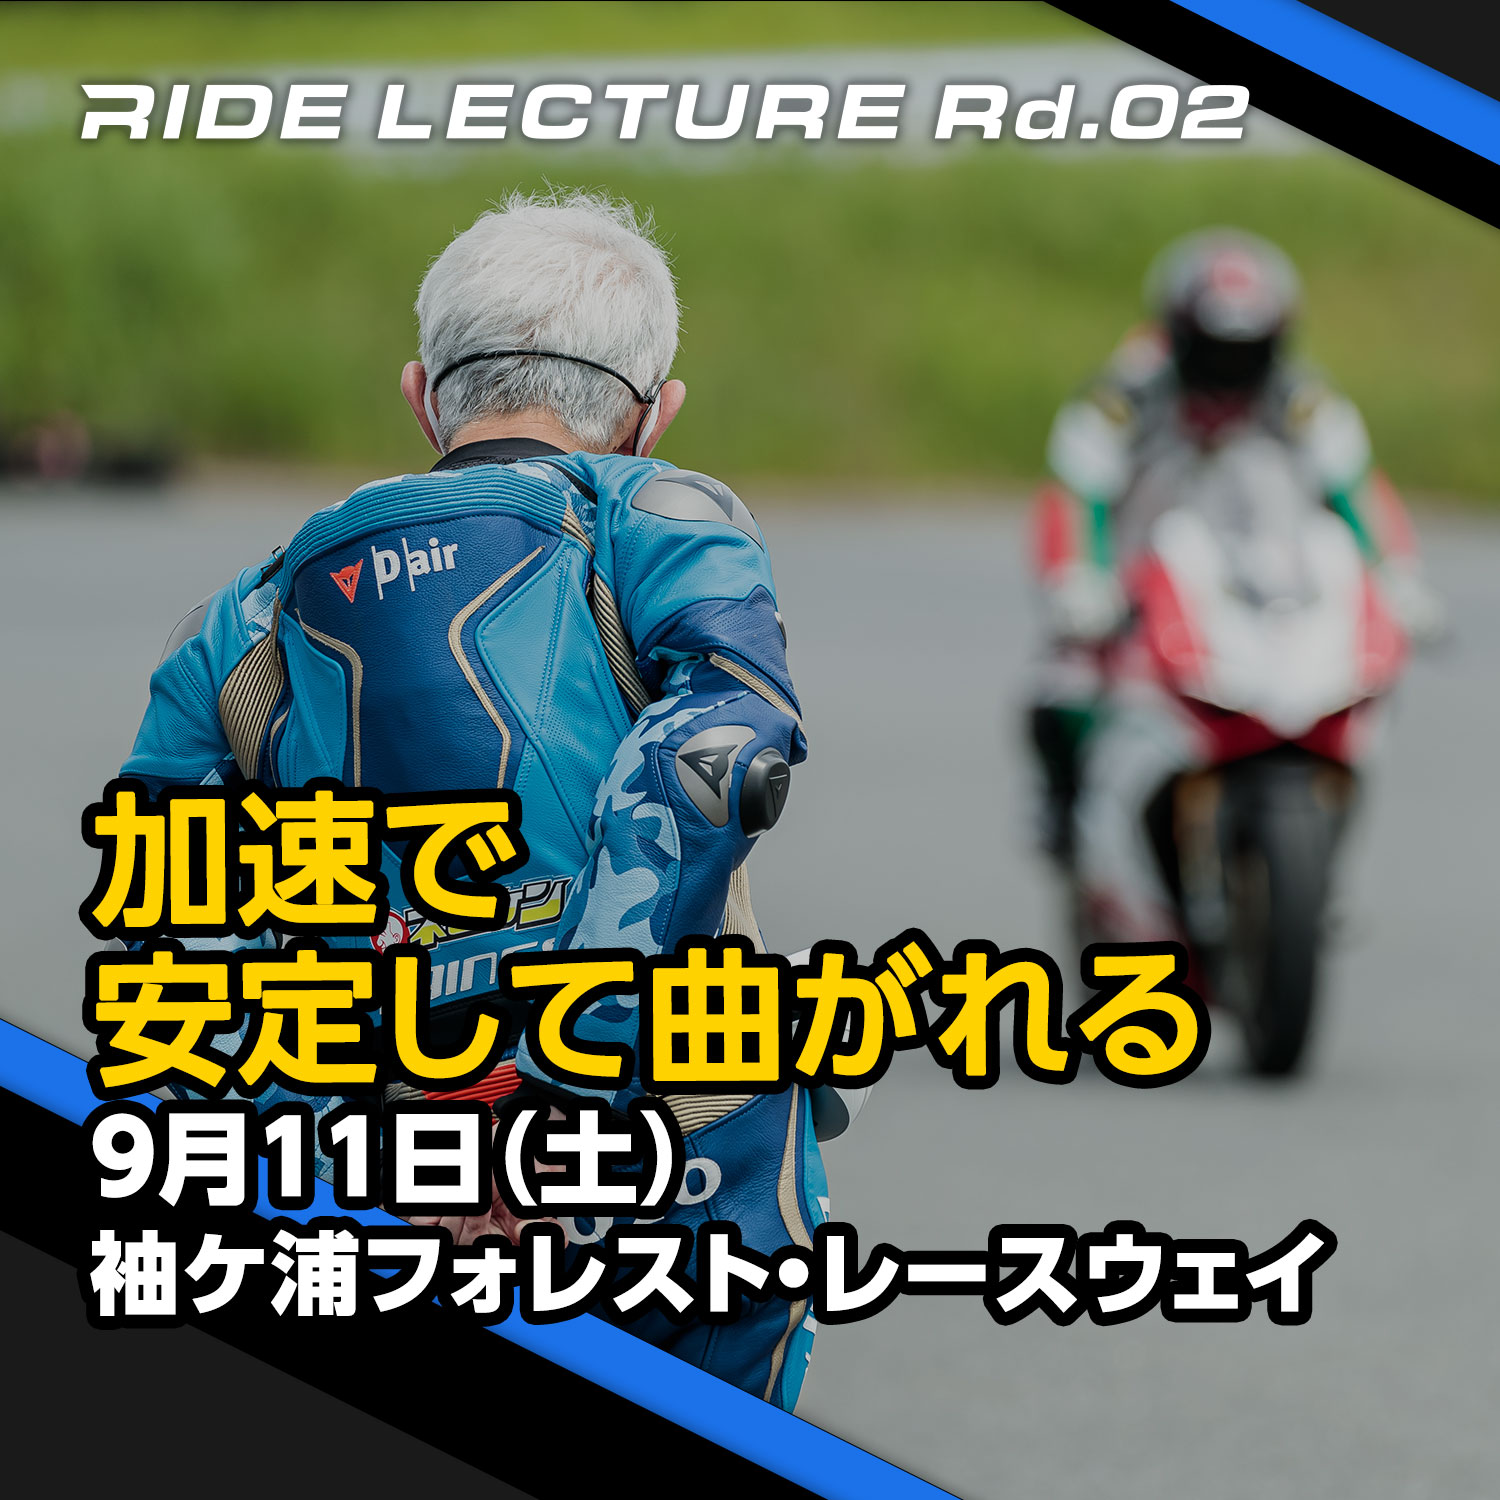 ride_lecture_round002_main (1).jpg